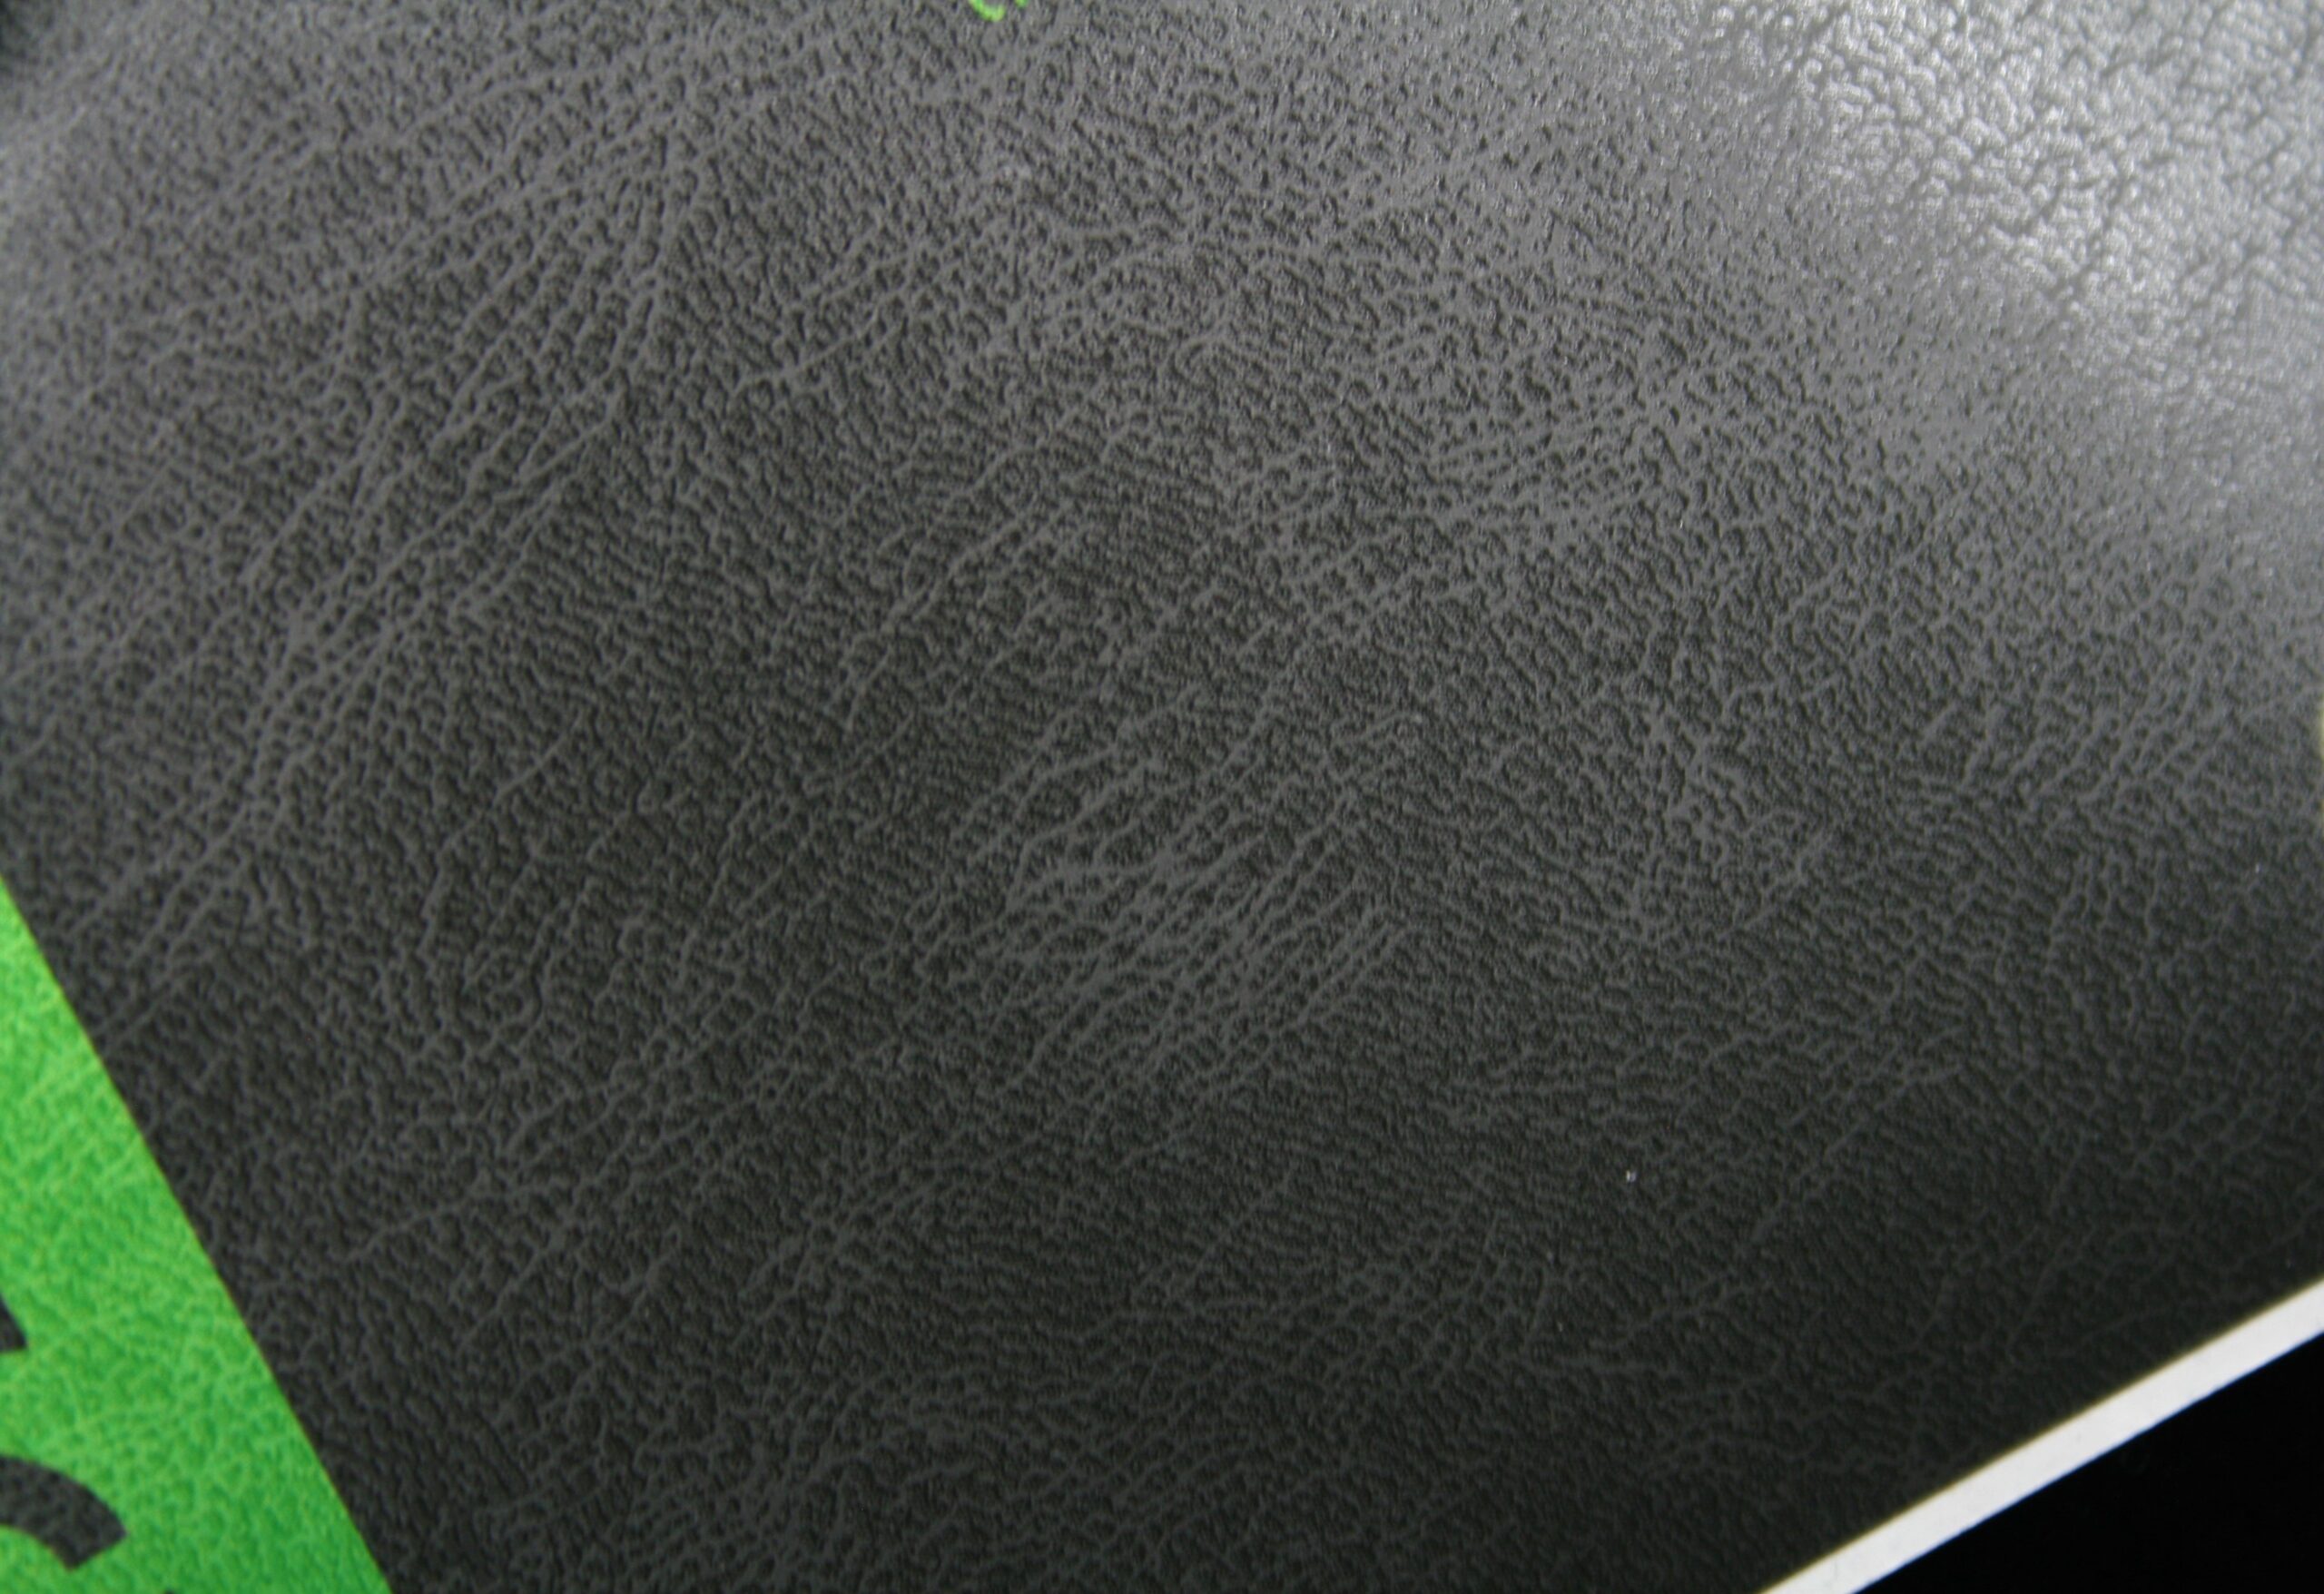 A closeup of a leather label laminate.